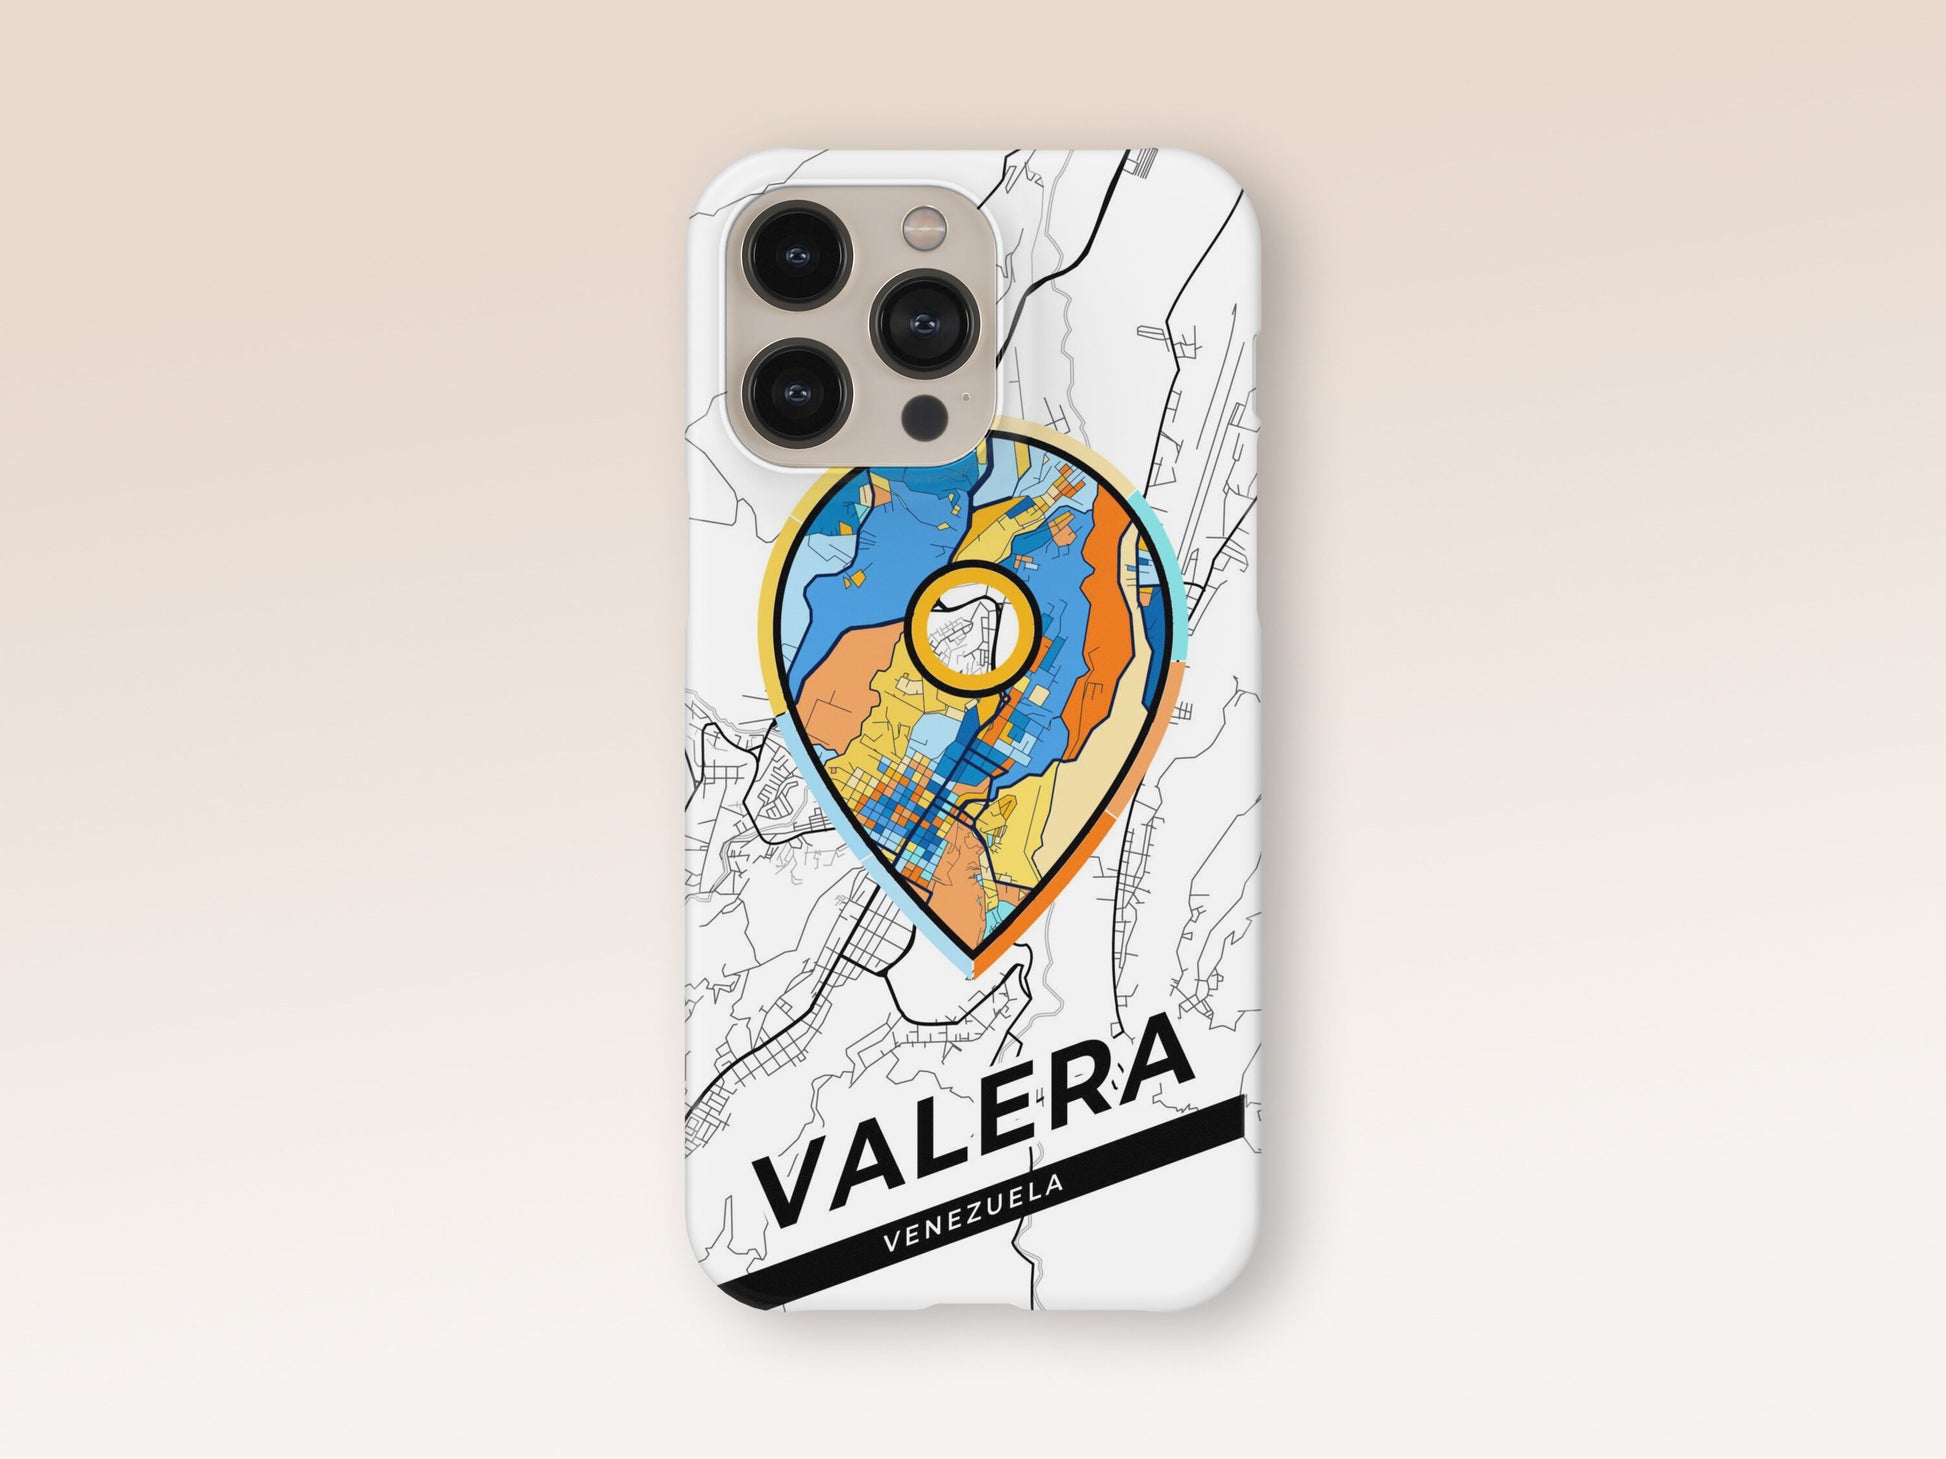 Valera Venezuela slim phone case with colorful icon. Birthday, wedding or housewarming gift. Couple match cases. 1